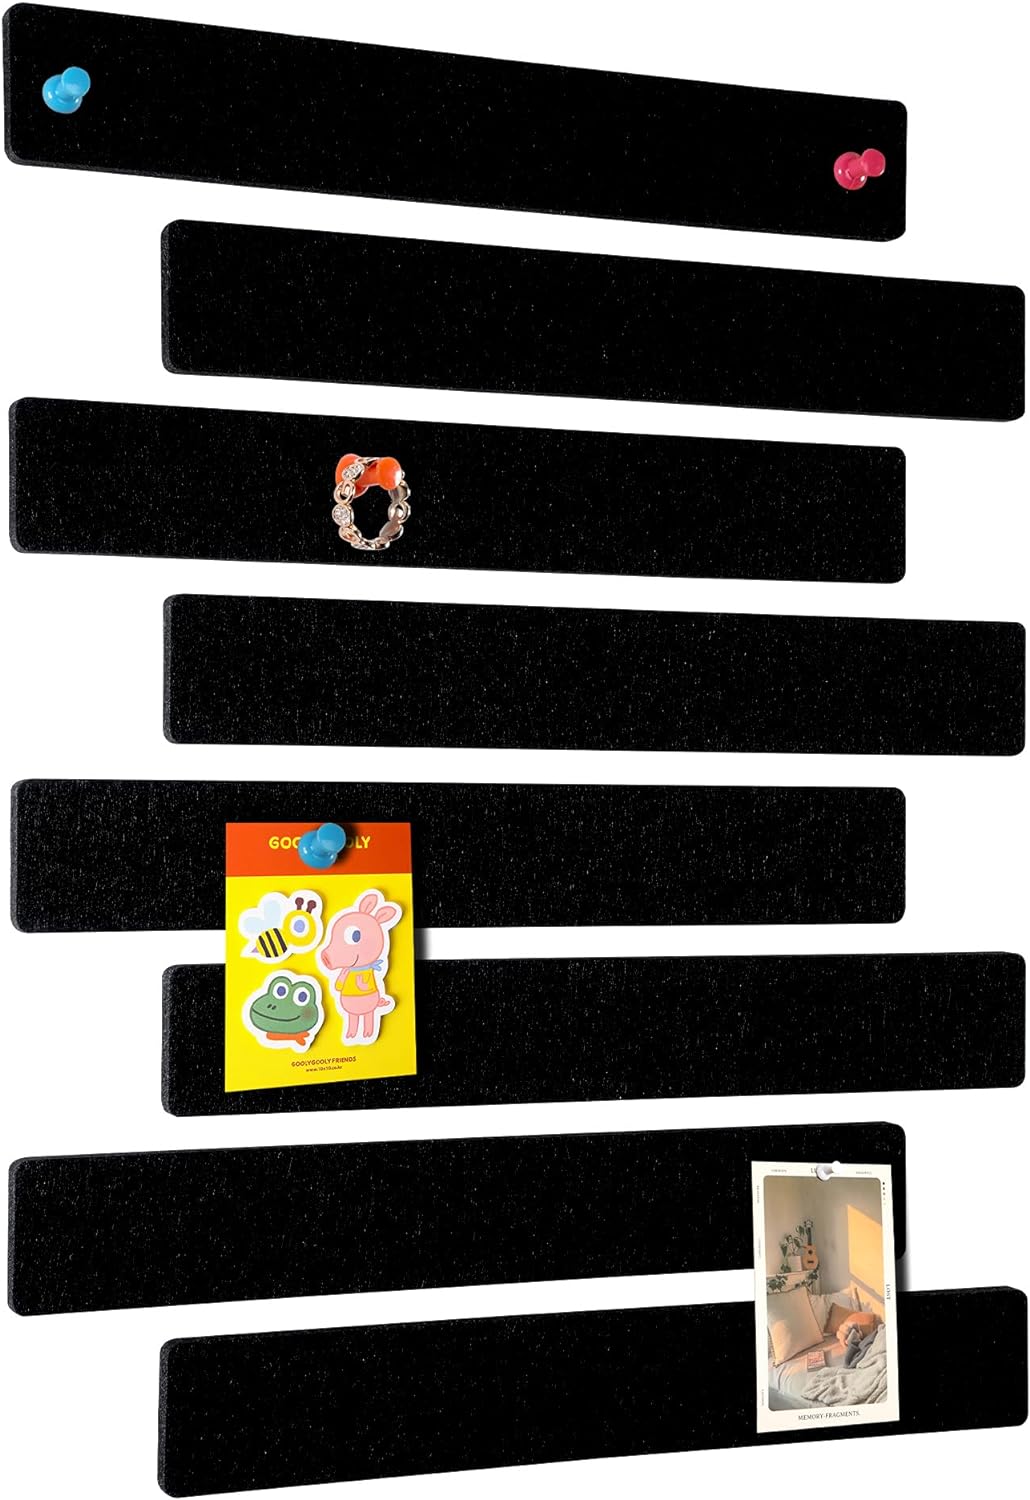 Felt Self-Adhesive Bulletin Board Bar Strips with 40 Push Pins 8 Pack